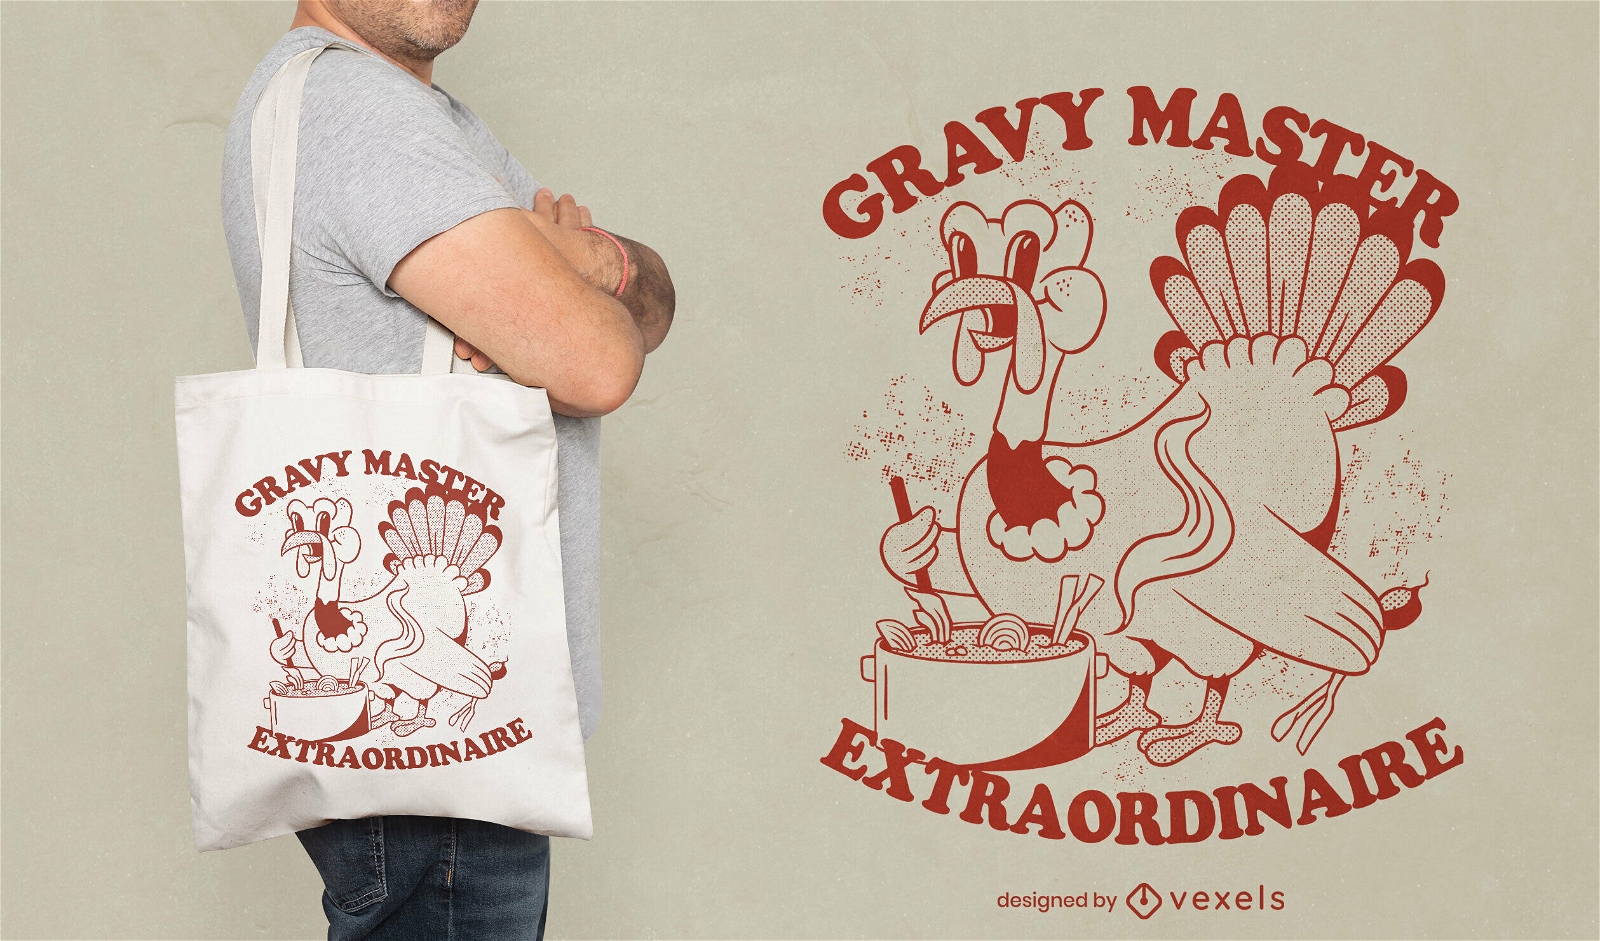 Gravy master turkey tote bag design